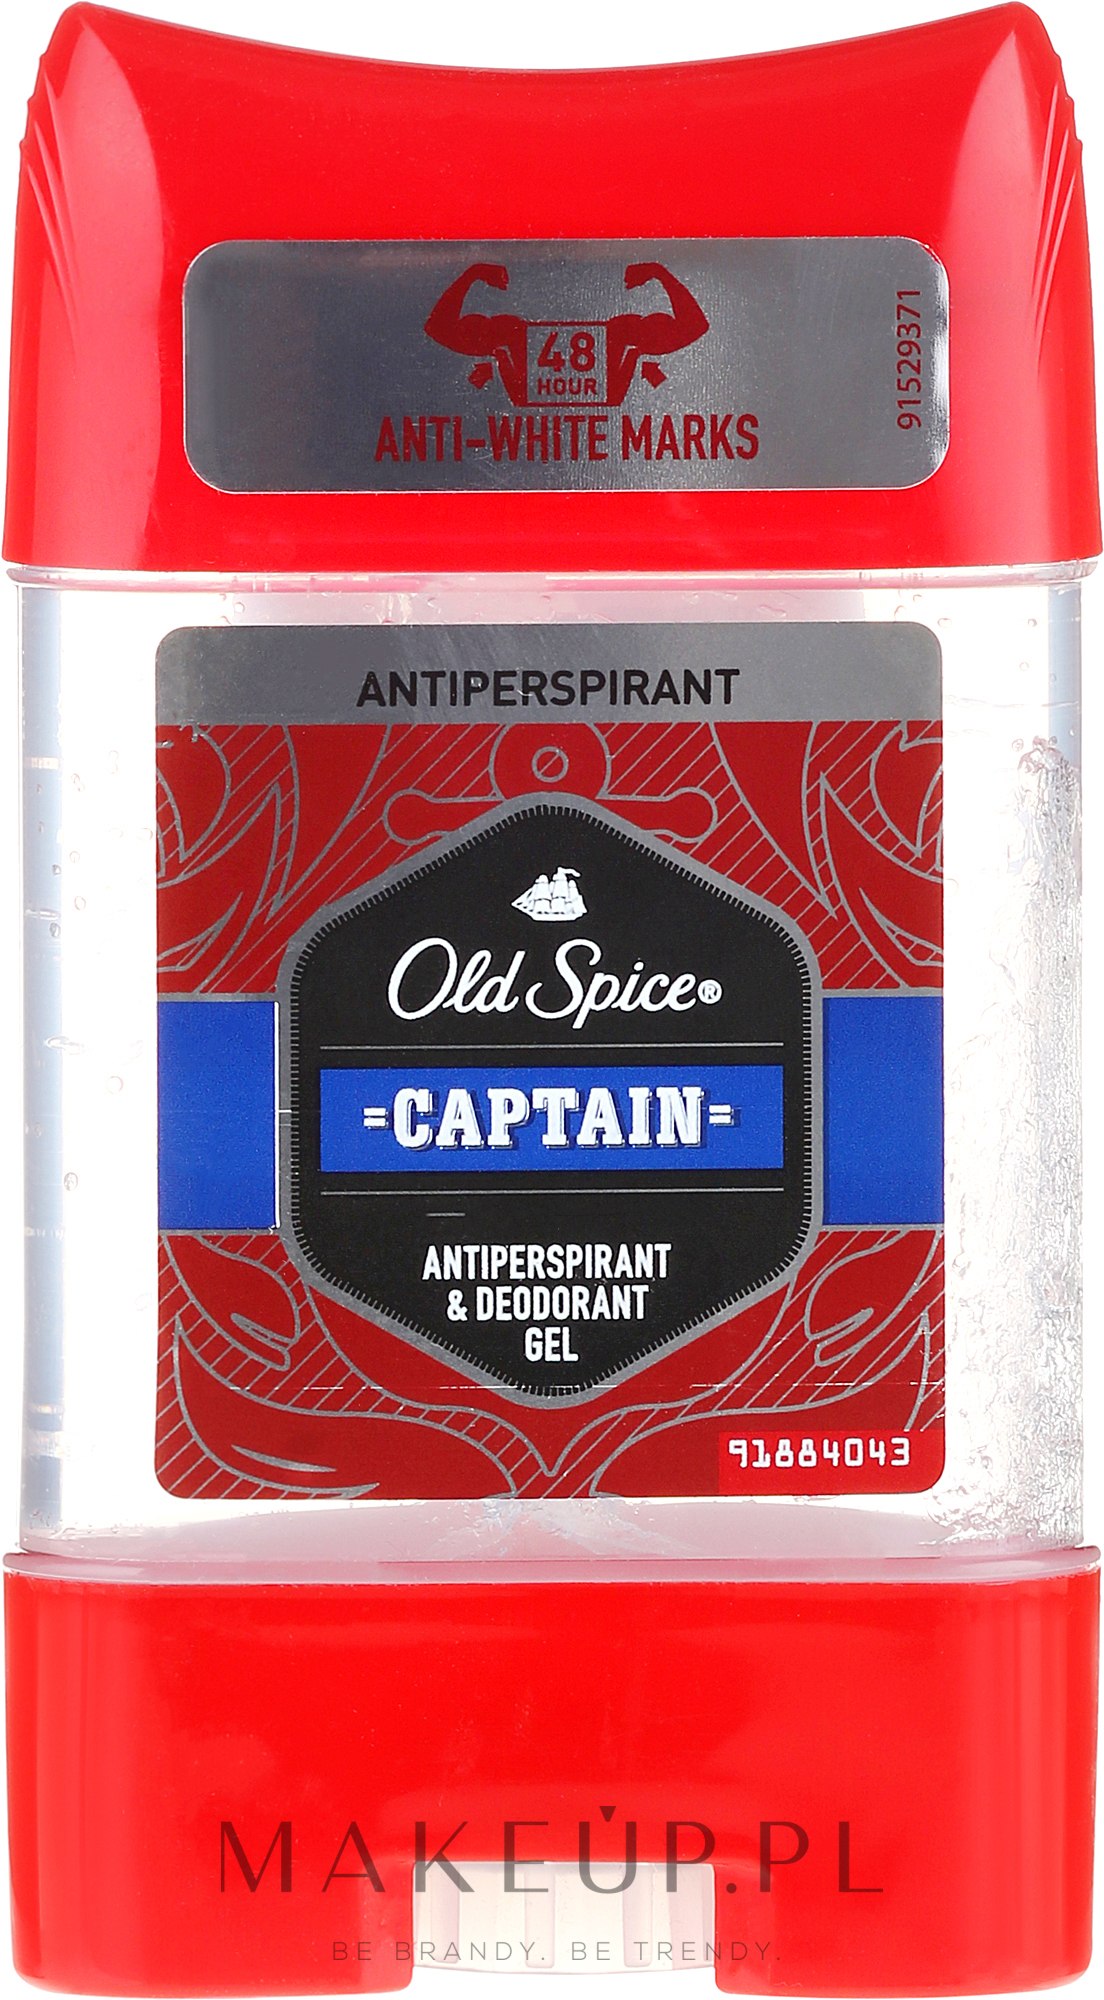 Antyperspirant w żelu - Old Spice Captain Antiperspirant Gel — Zdjęcie 70 ml